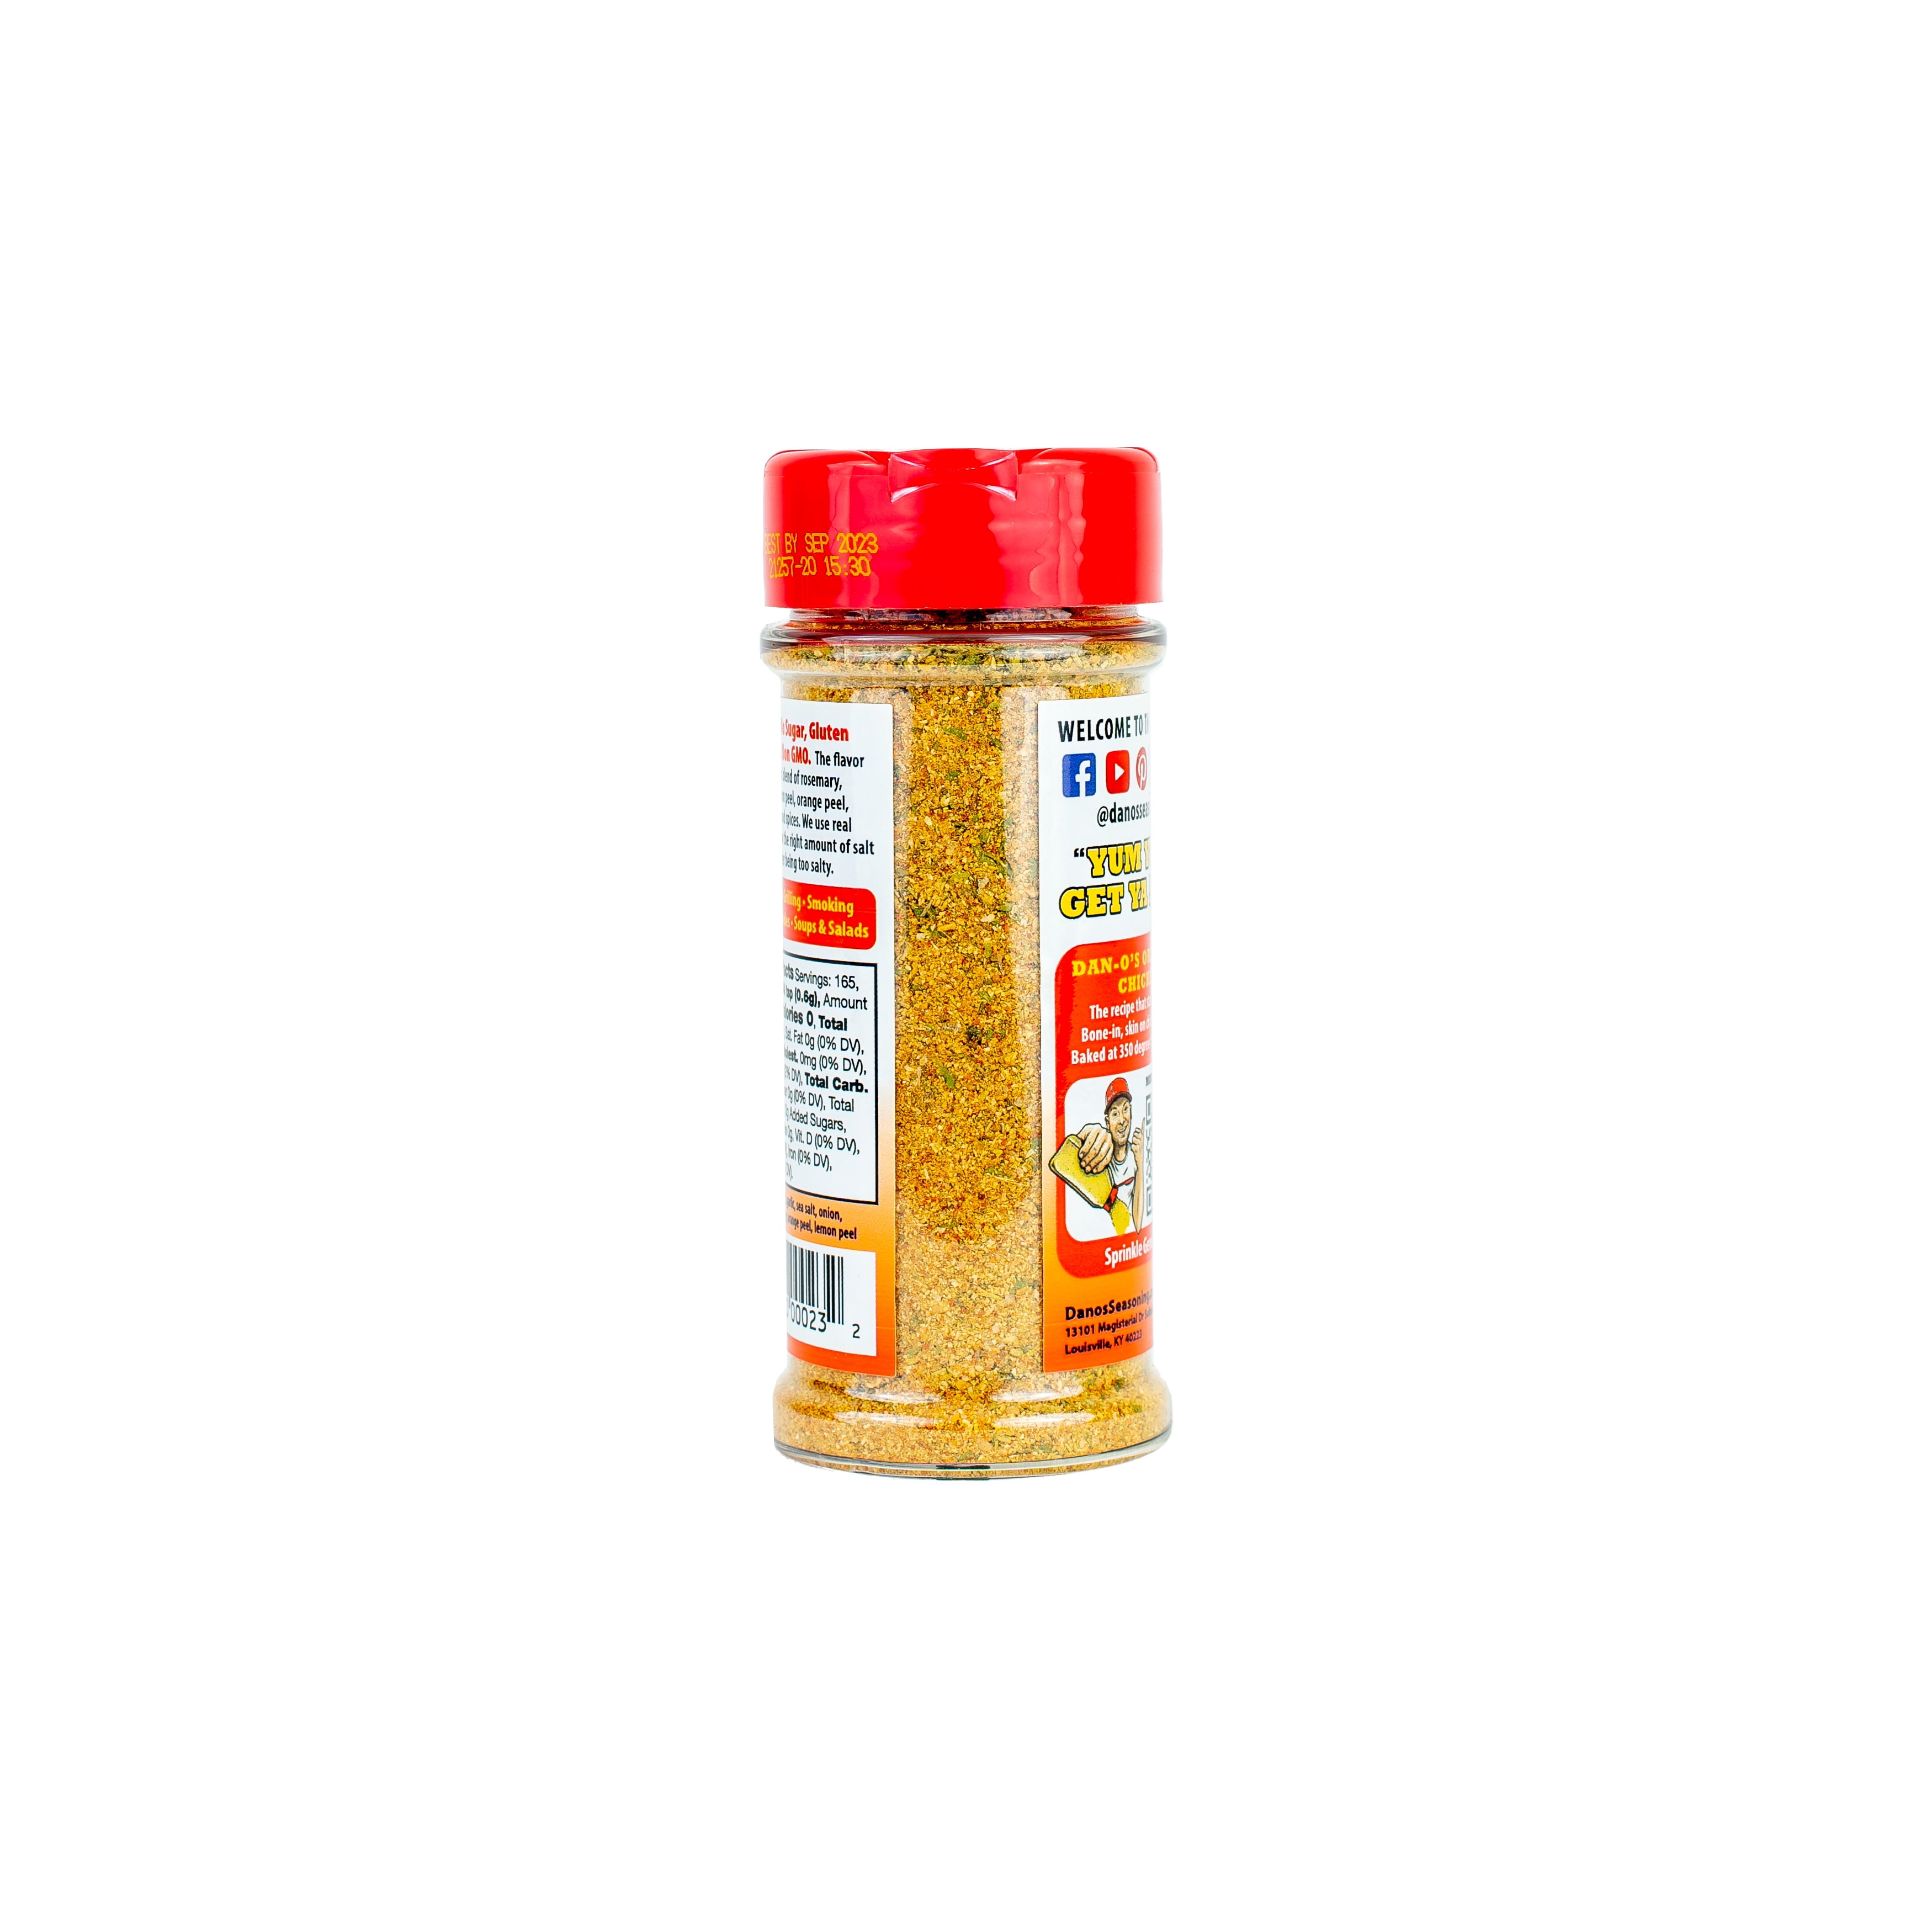 Spicy Dan-O's Original Seasoning - All Natural, Low Sodium, No MSG (20 oz)